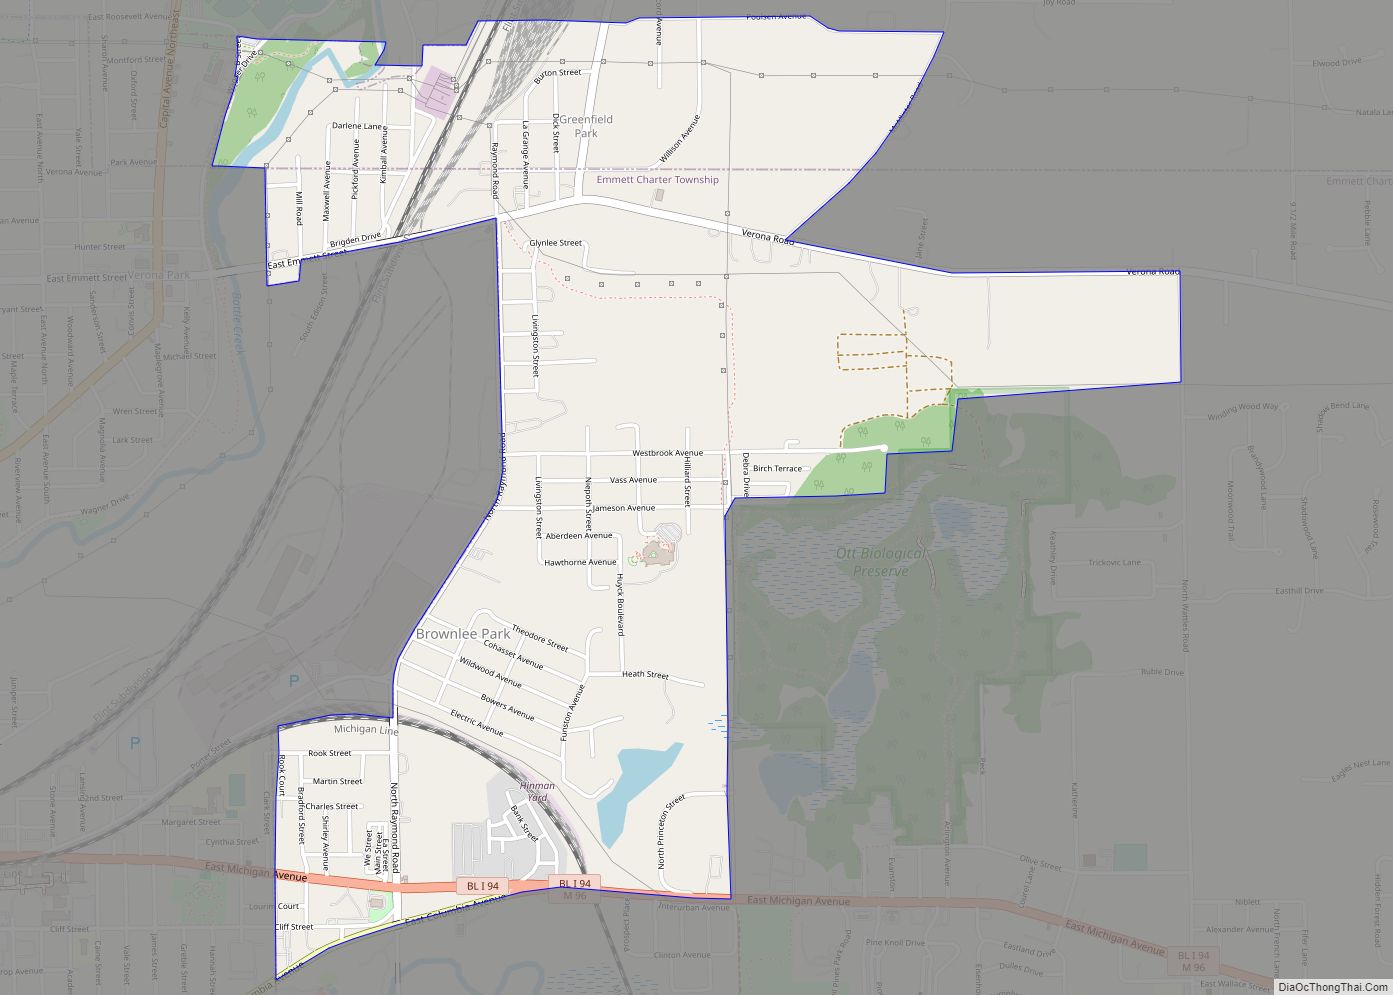 Map of Brownlee Park CDP